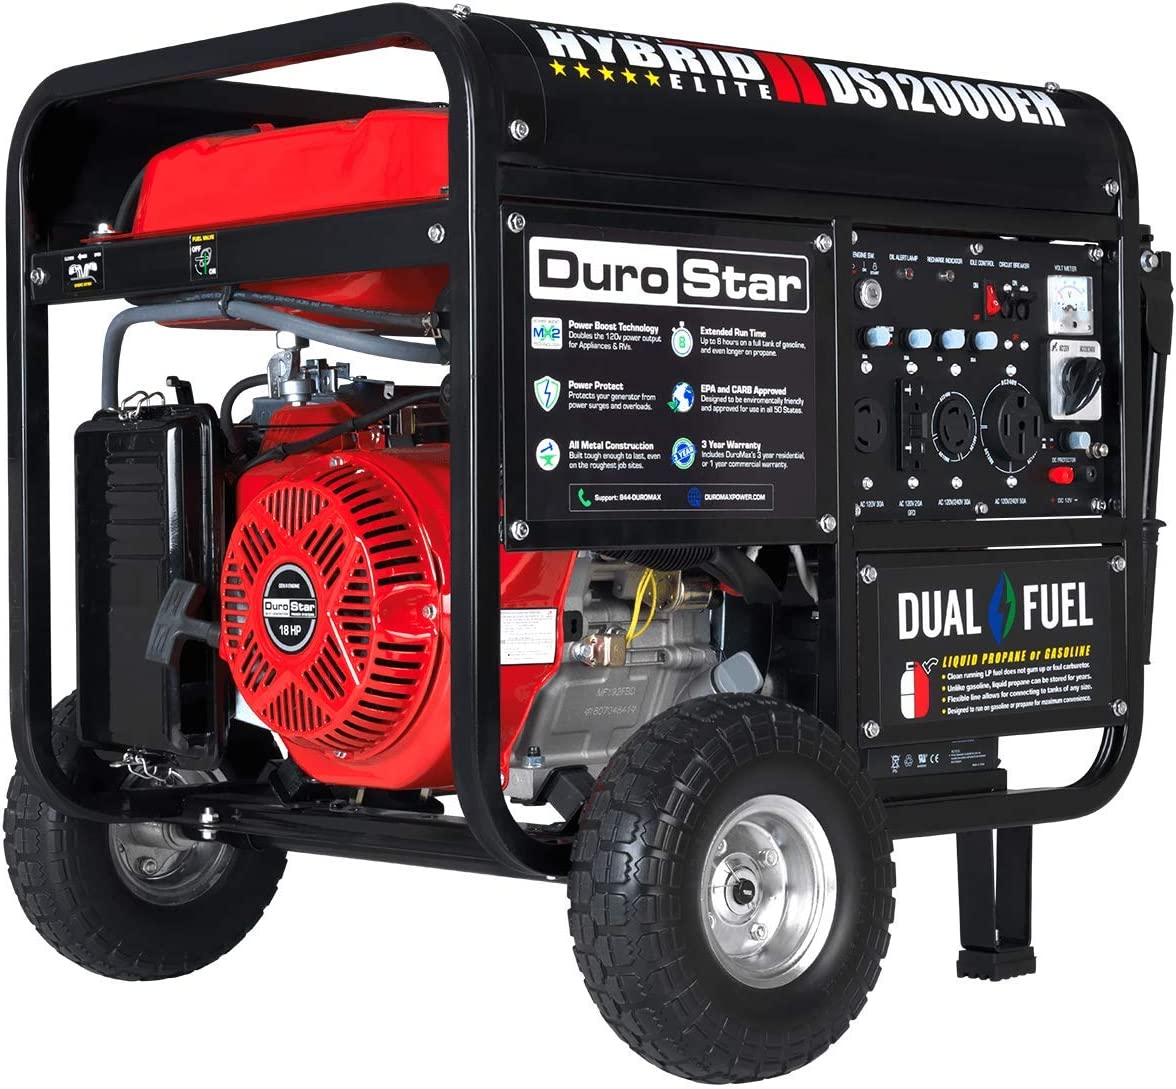 DuroStar 12000-Watt Gas or Propane Dual Fuel Electric Start Portable Generator